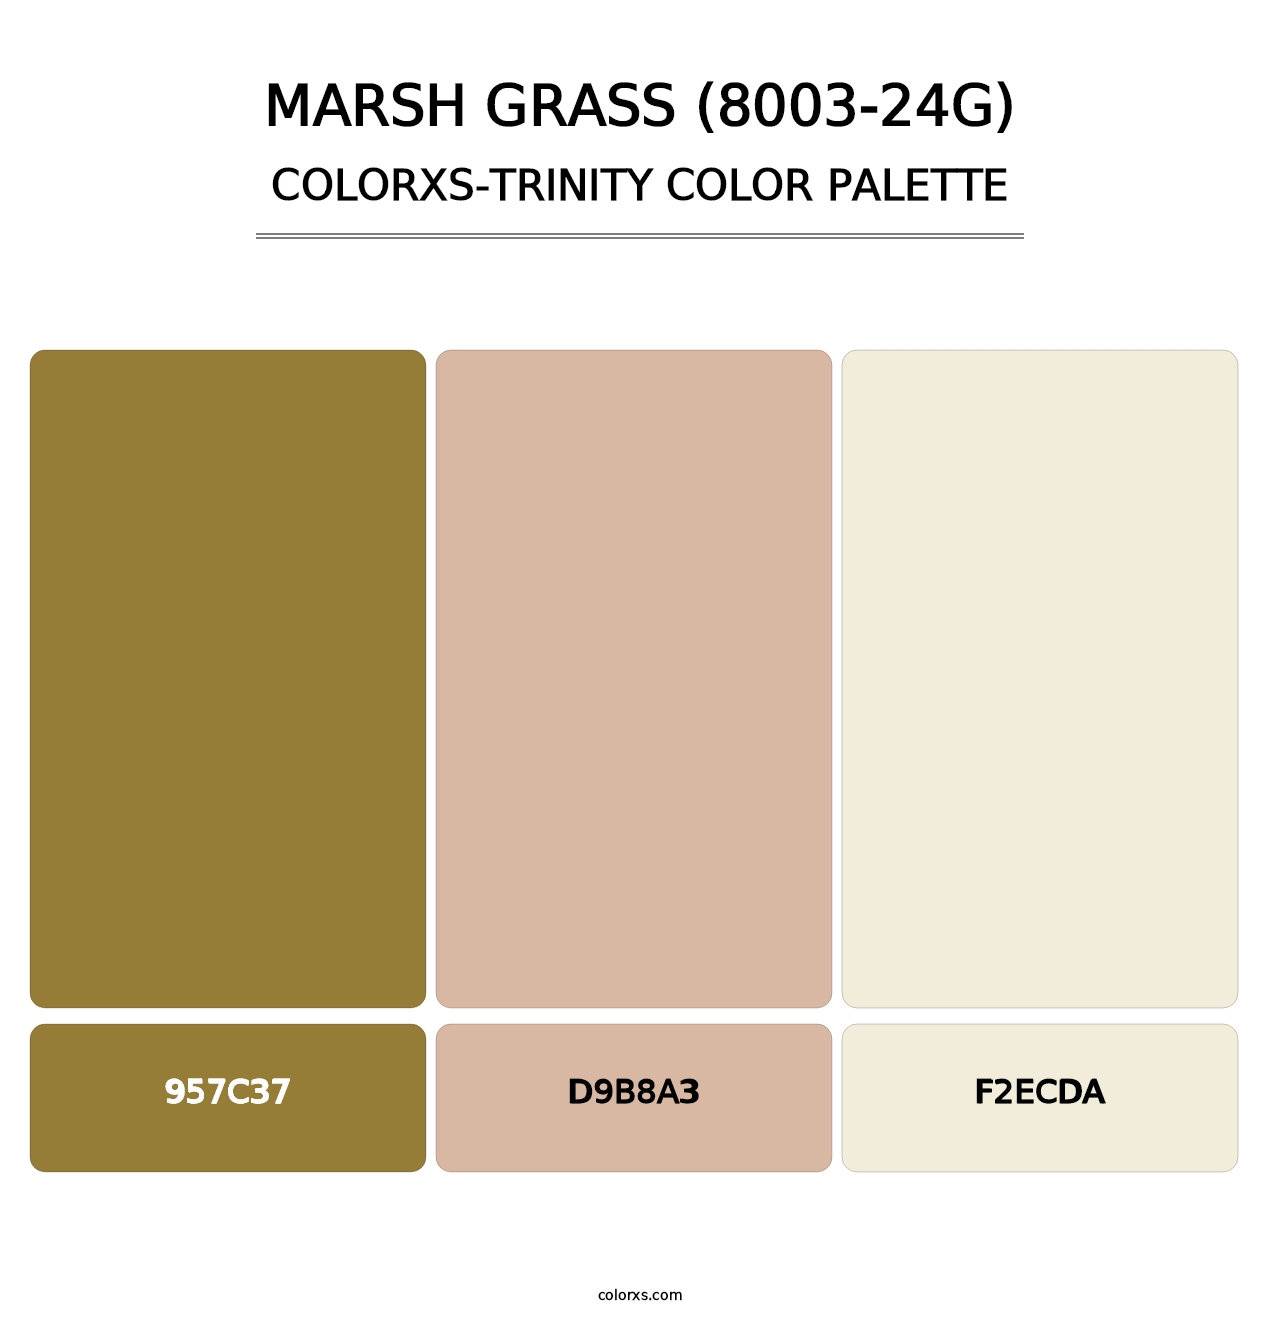 Marsh Grass (8003-24G) - Colorxs Trinity Palette